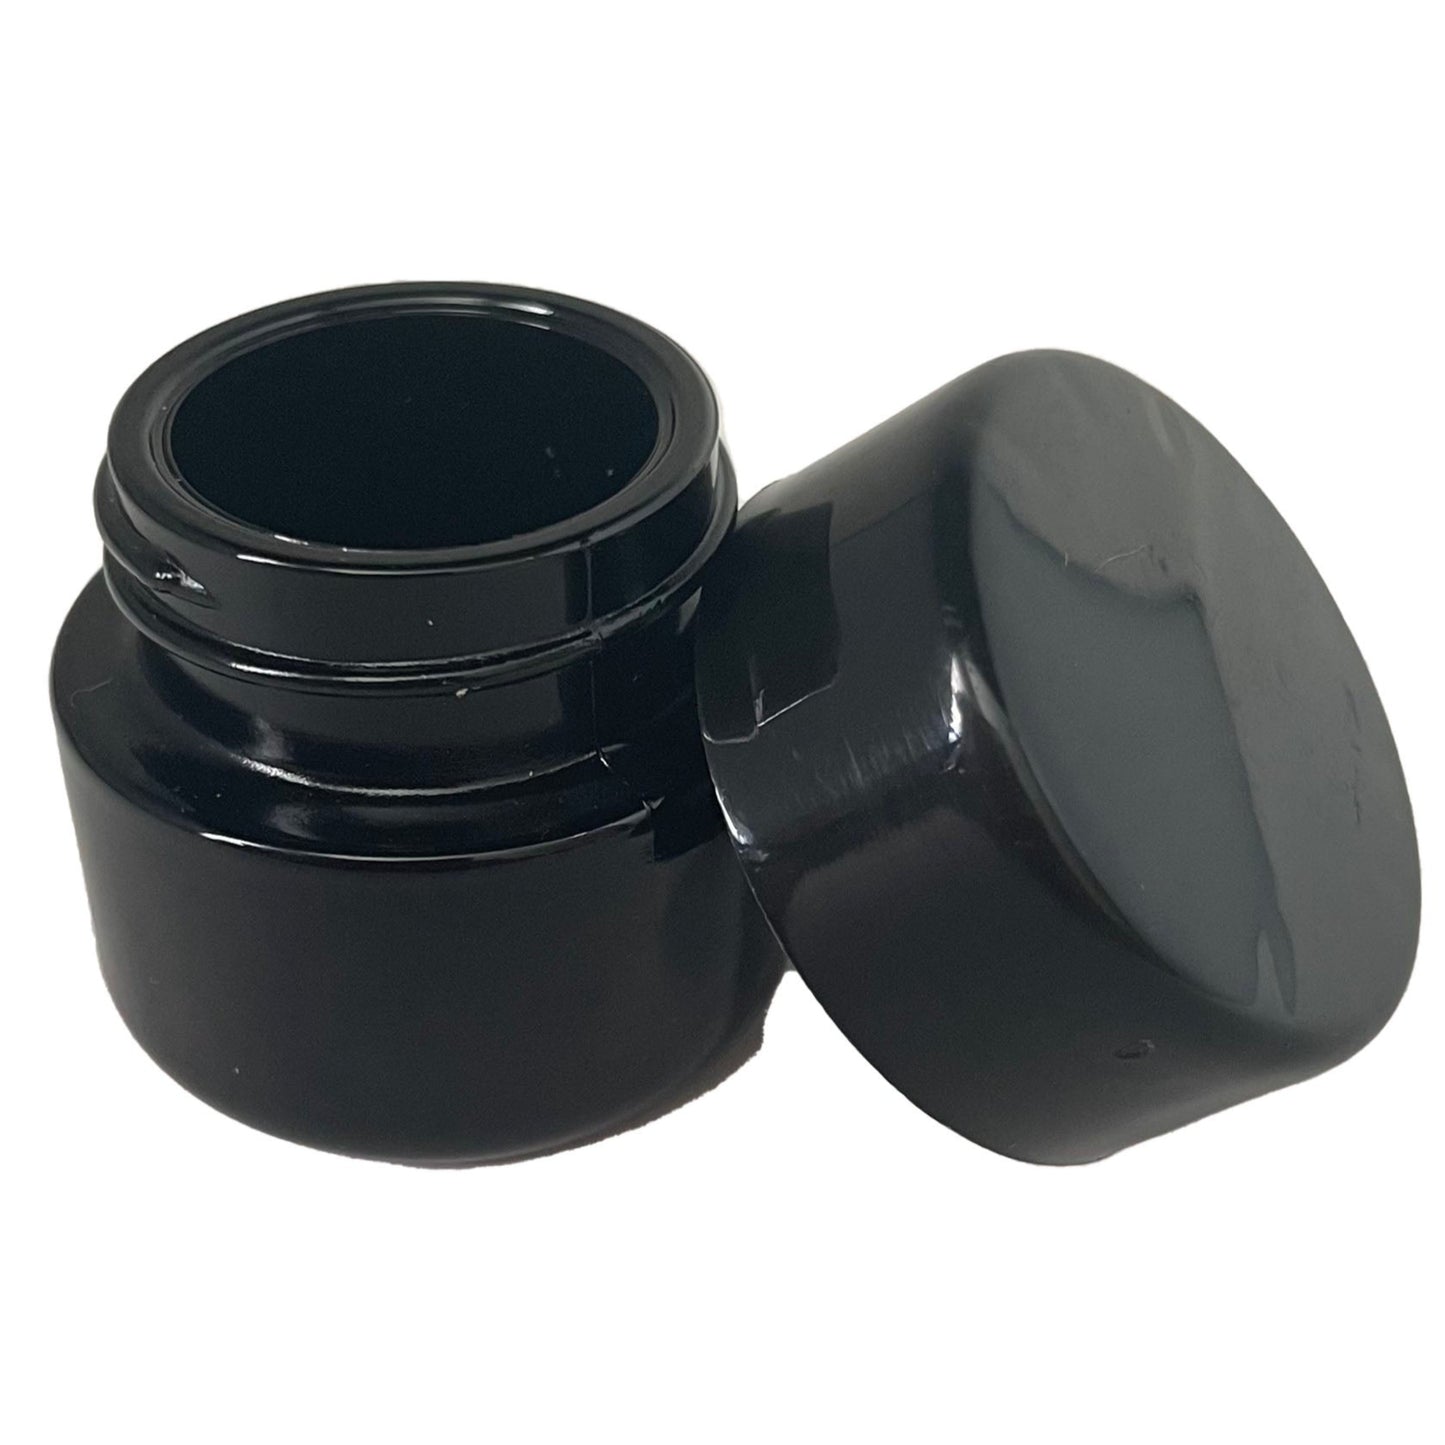 9 ml UV Black Jar